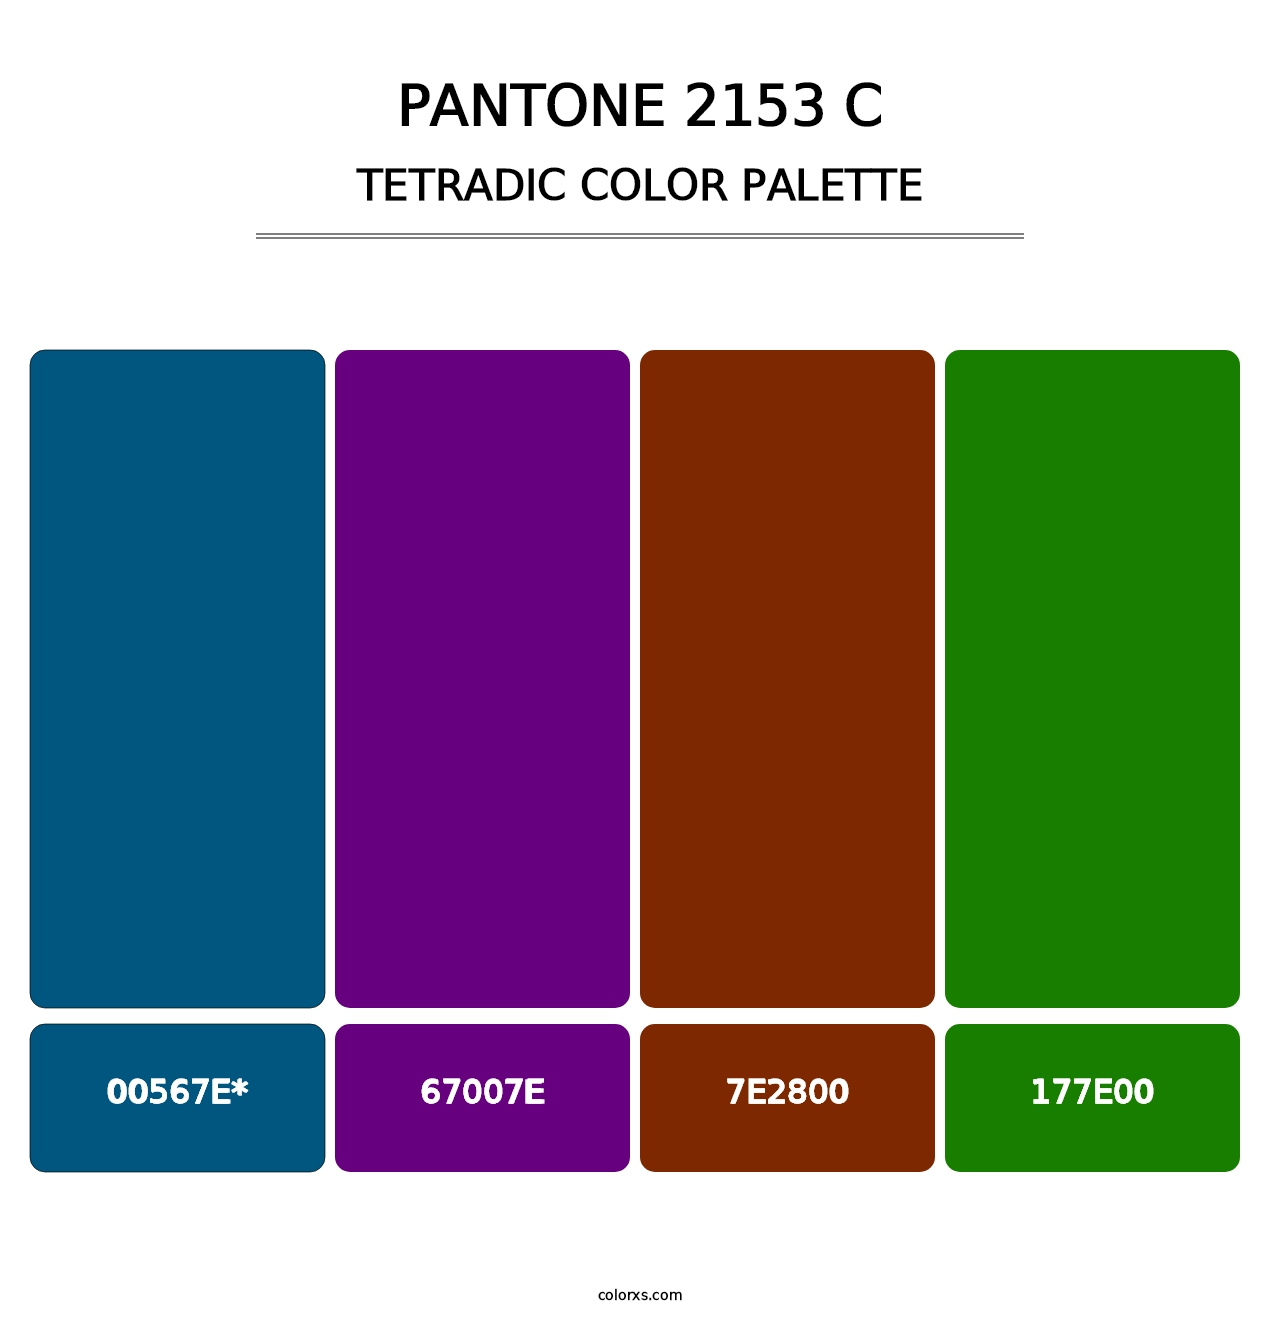 PANTONE 2153 C - Tetradic Color Palette